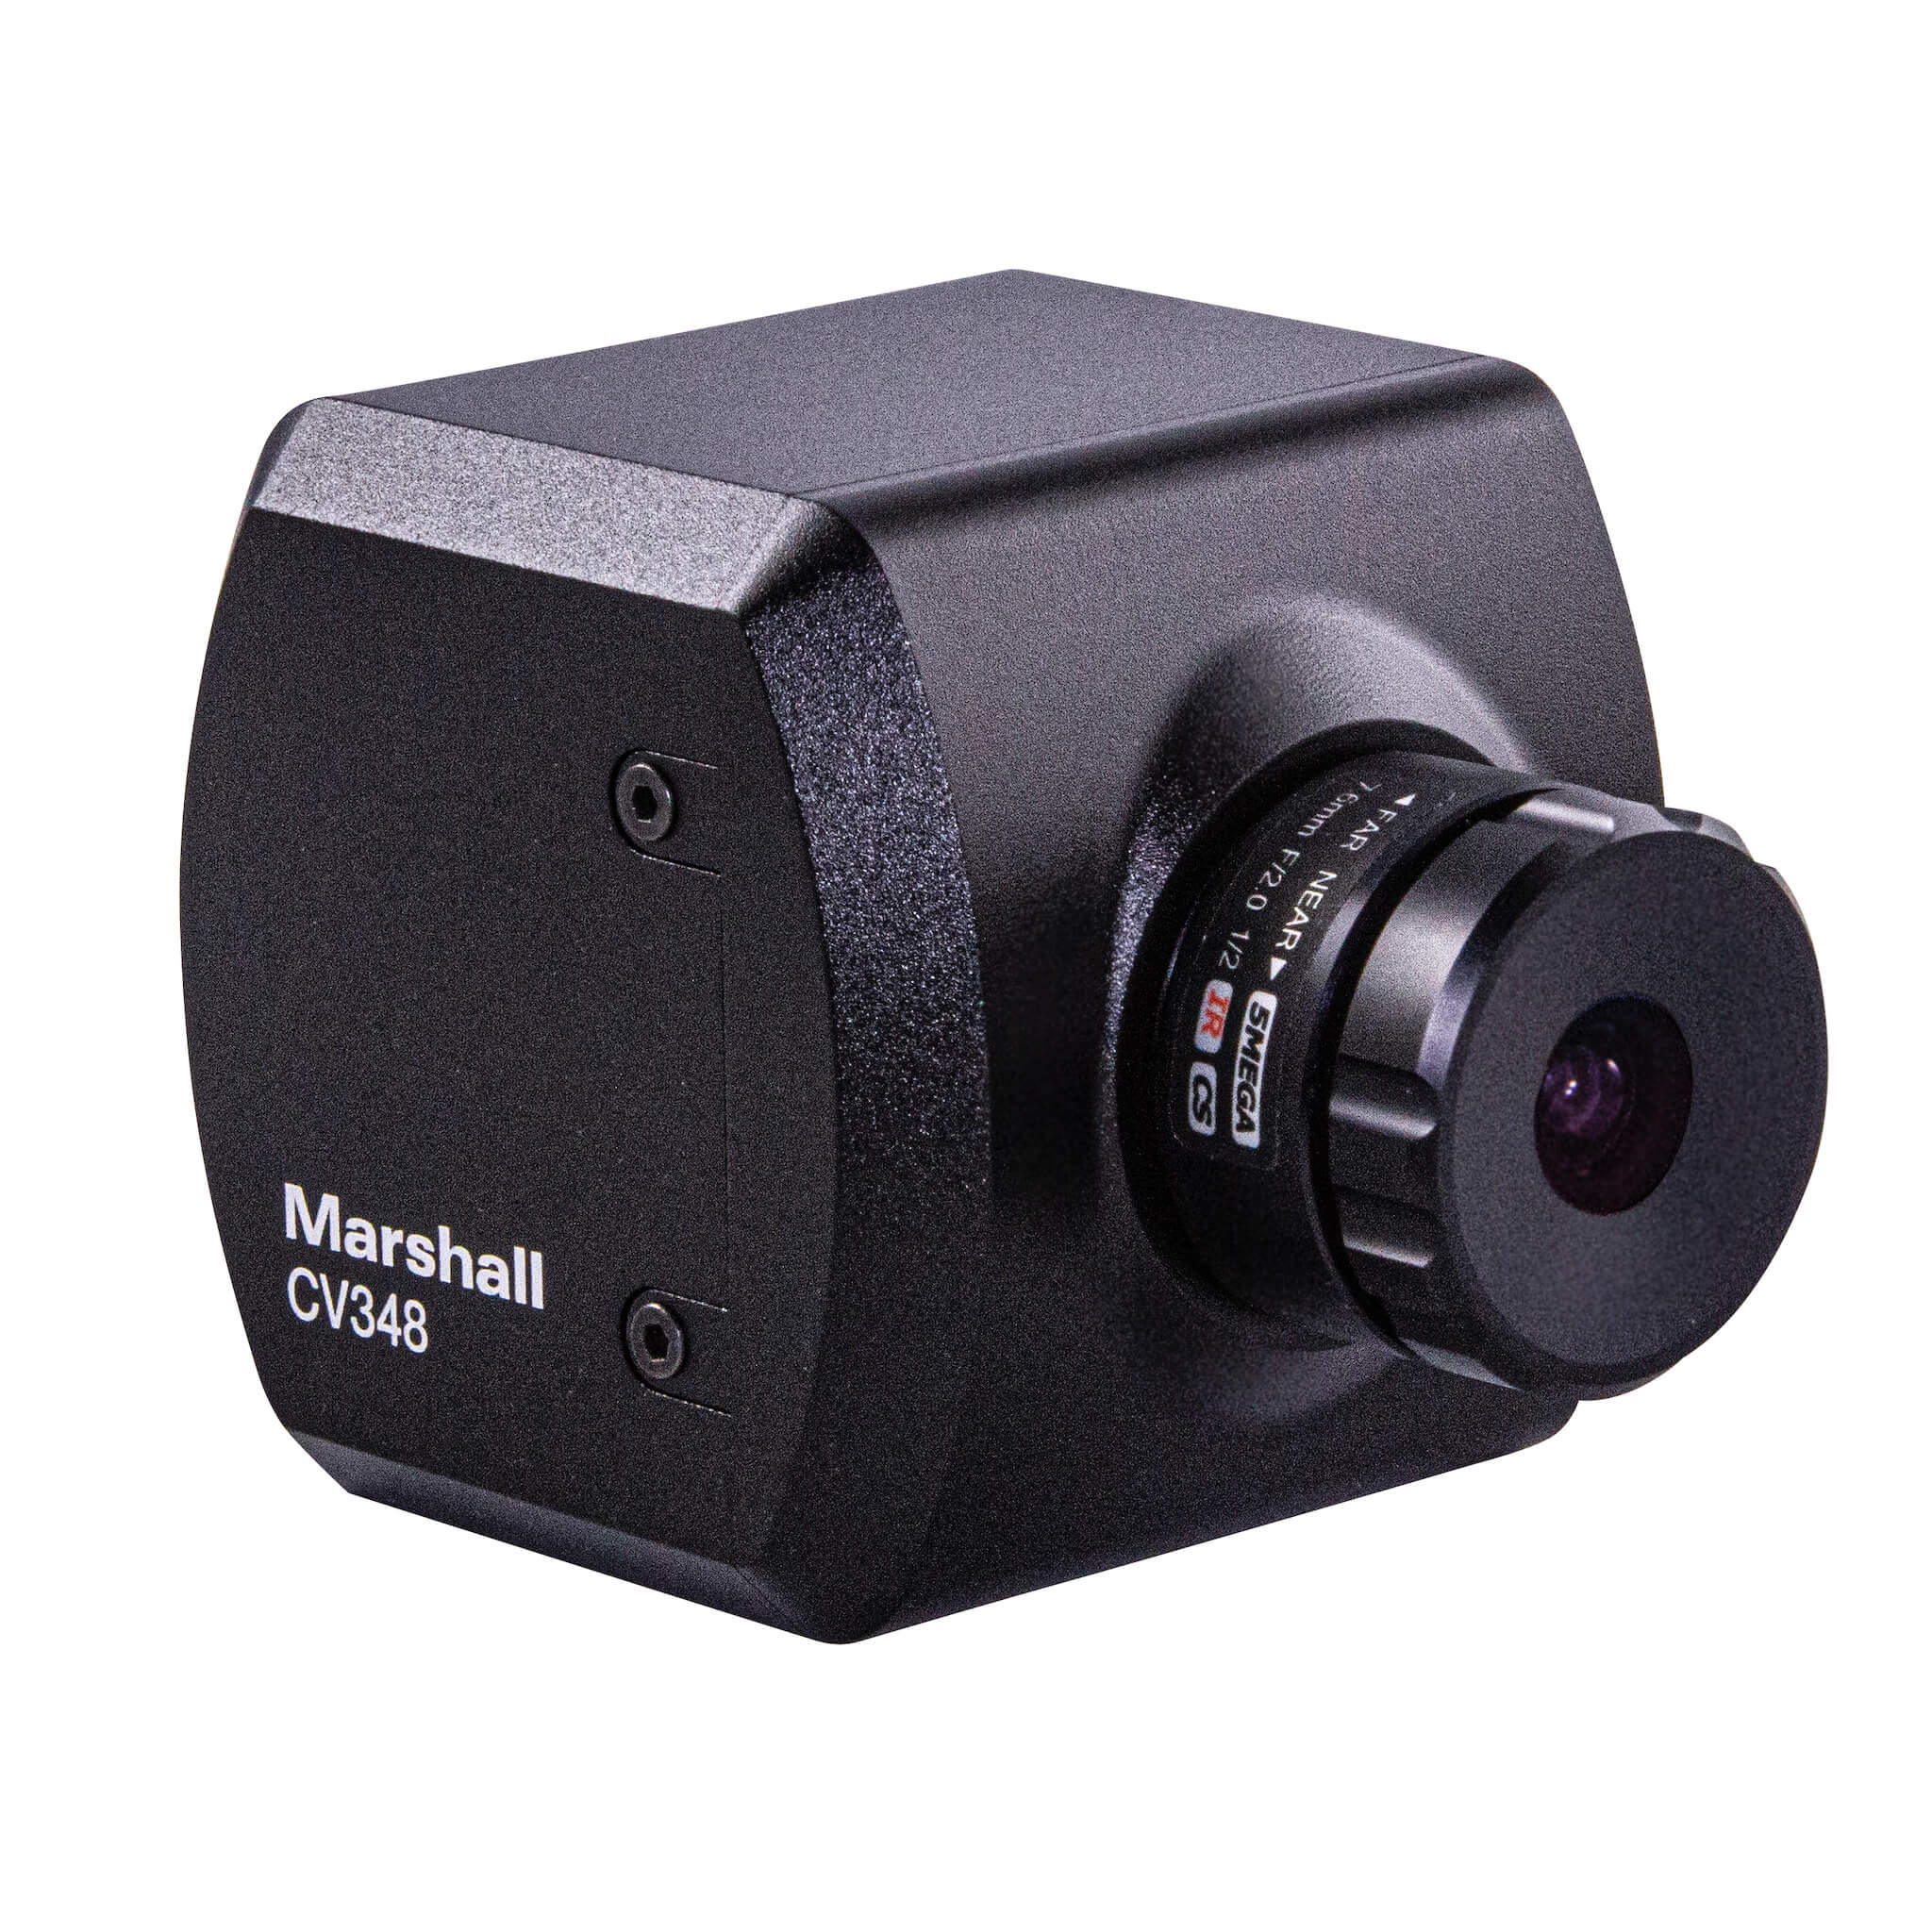 Marshall CV348 - Compact POV Camera 3G/HD-SDI, right angle